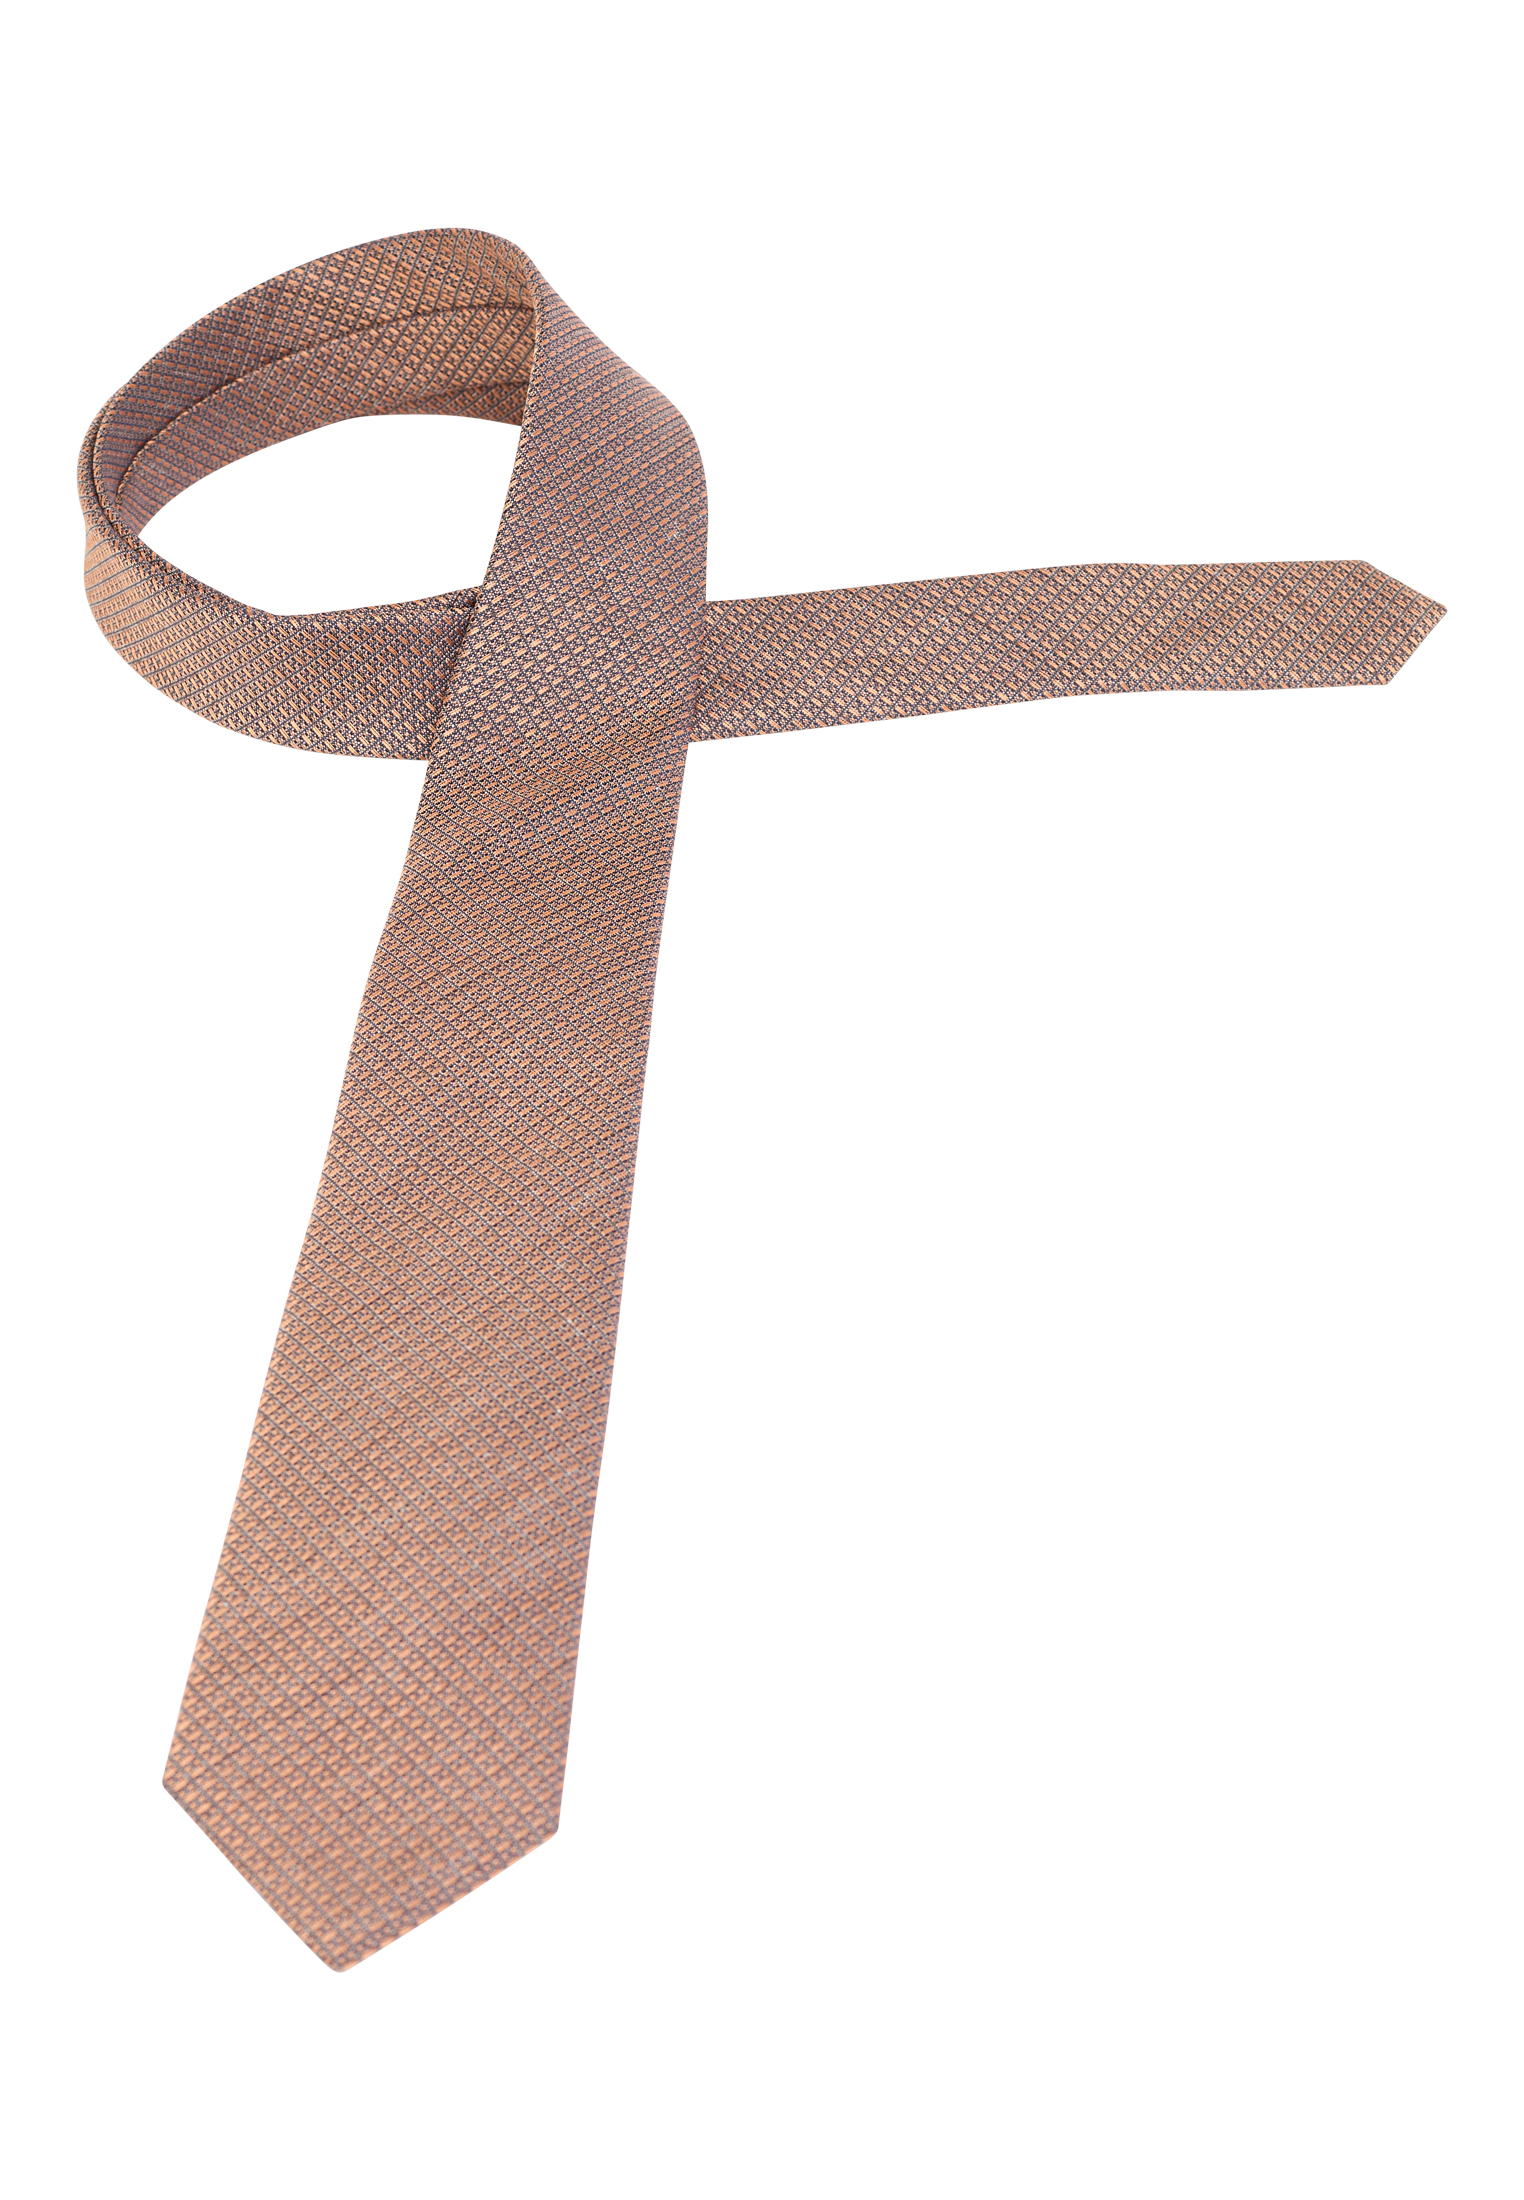 Krawatte in terracotta gemustert | terracotta | 142 | 1AC01949-08-91-142